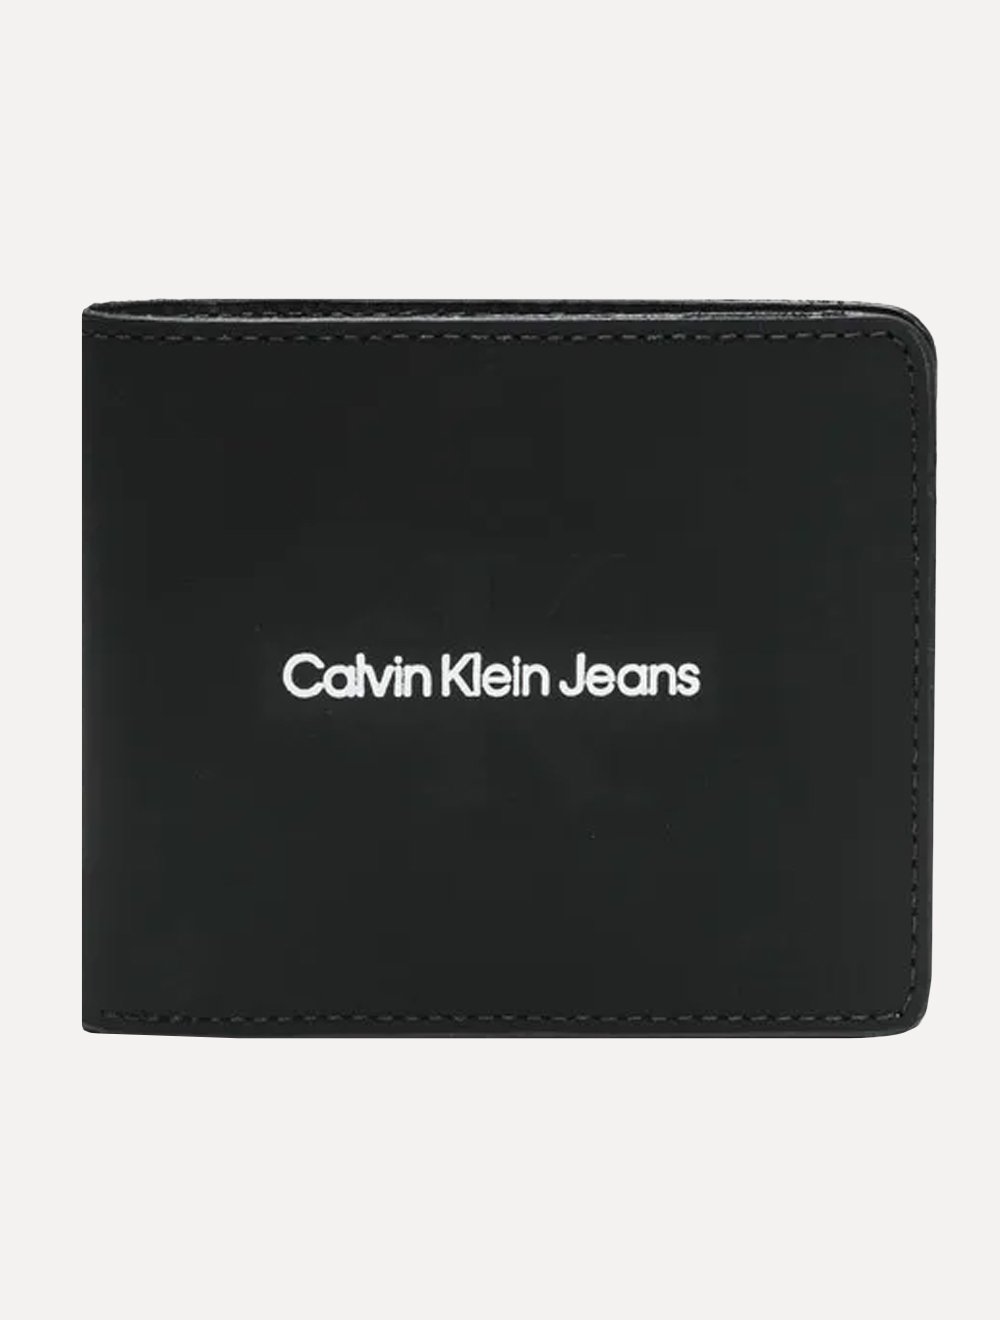 Carteira Calvin Klein Masculina Couro Re Issue Stripe Preta